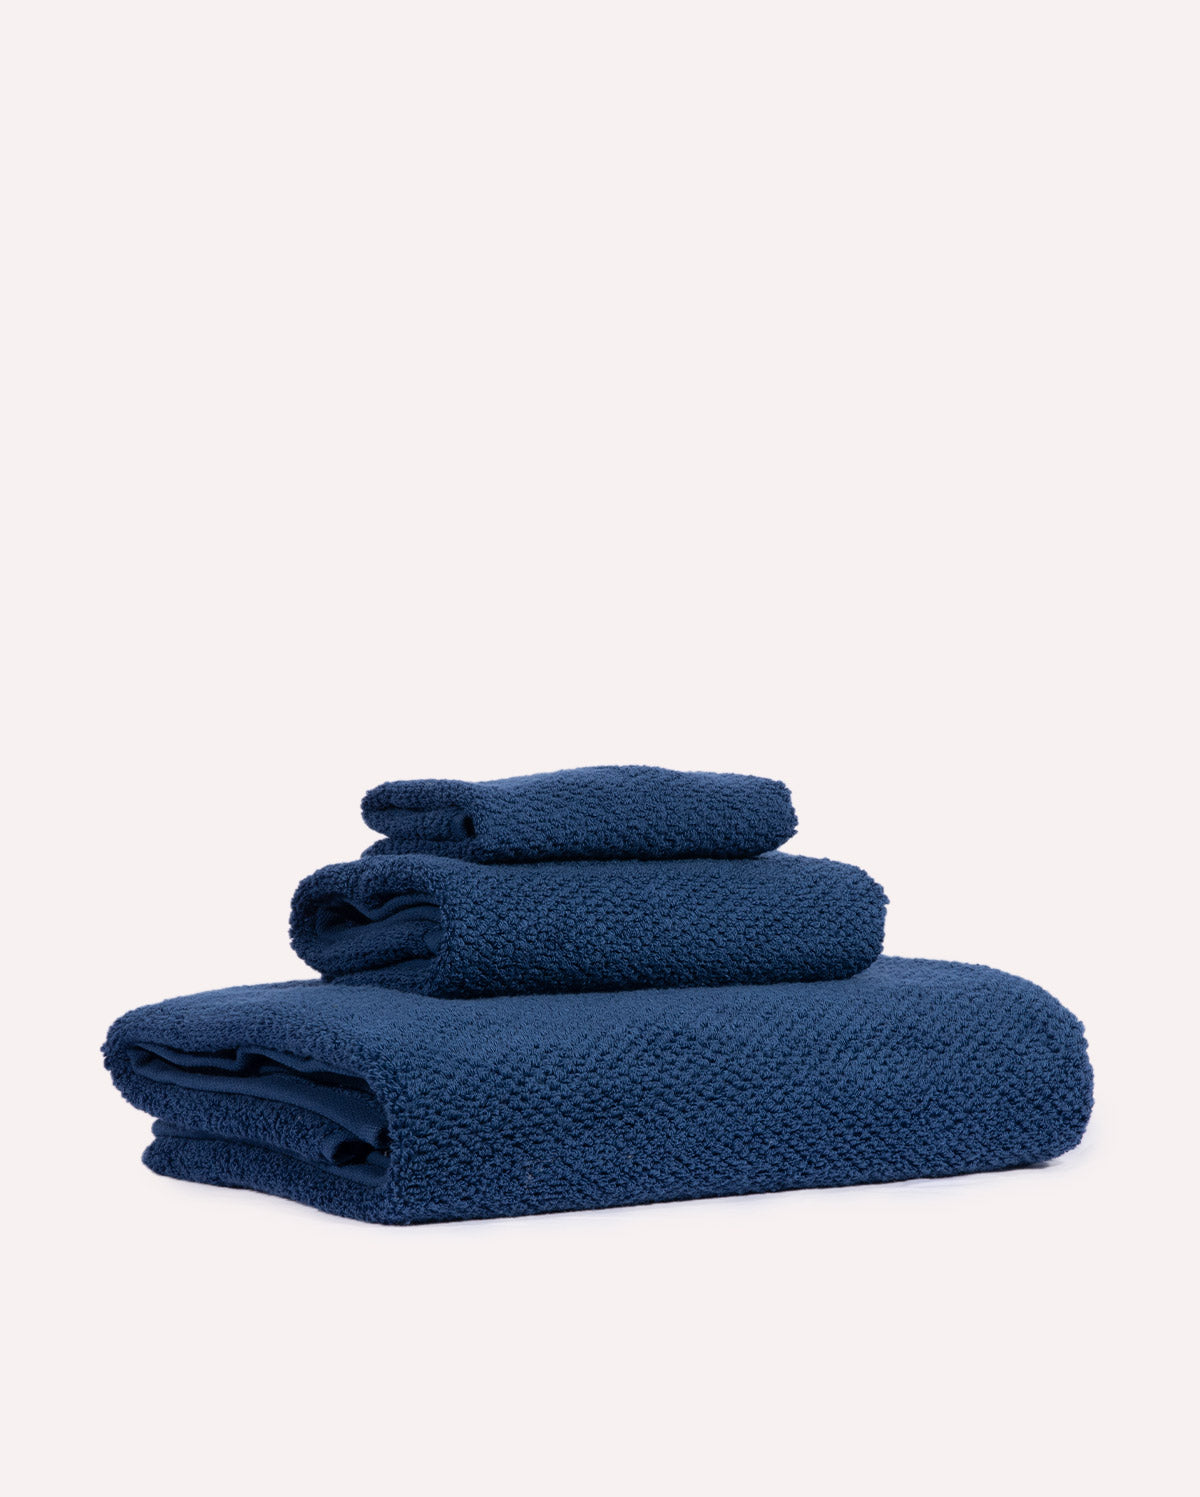 Willow Cotton Towel Set - Navy Blue (3 Towels)